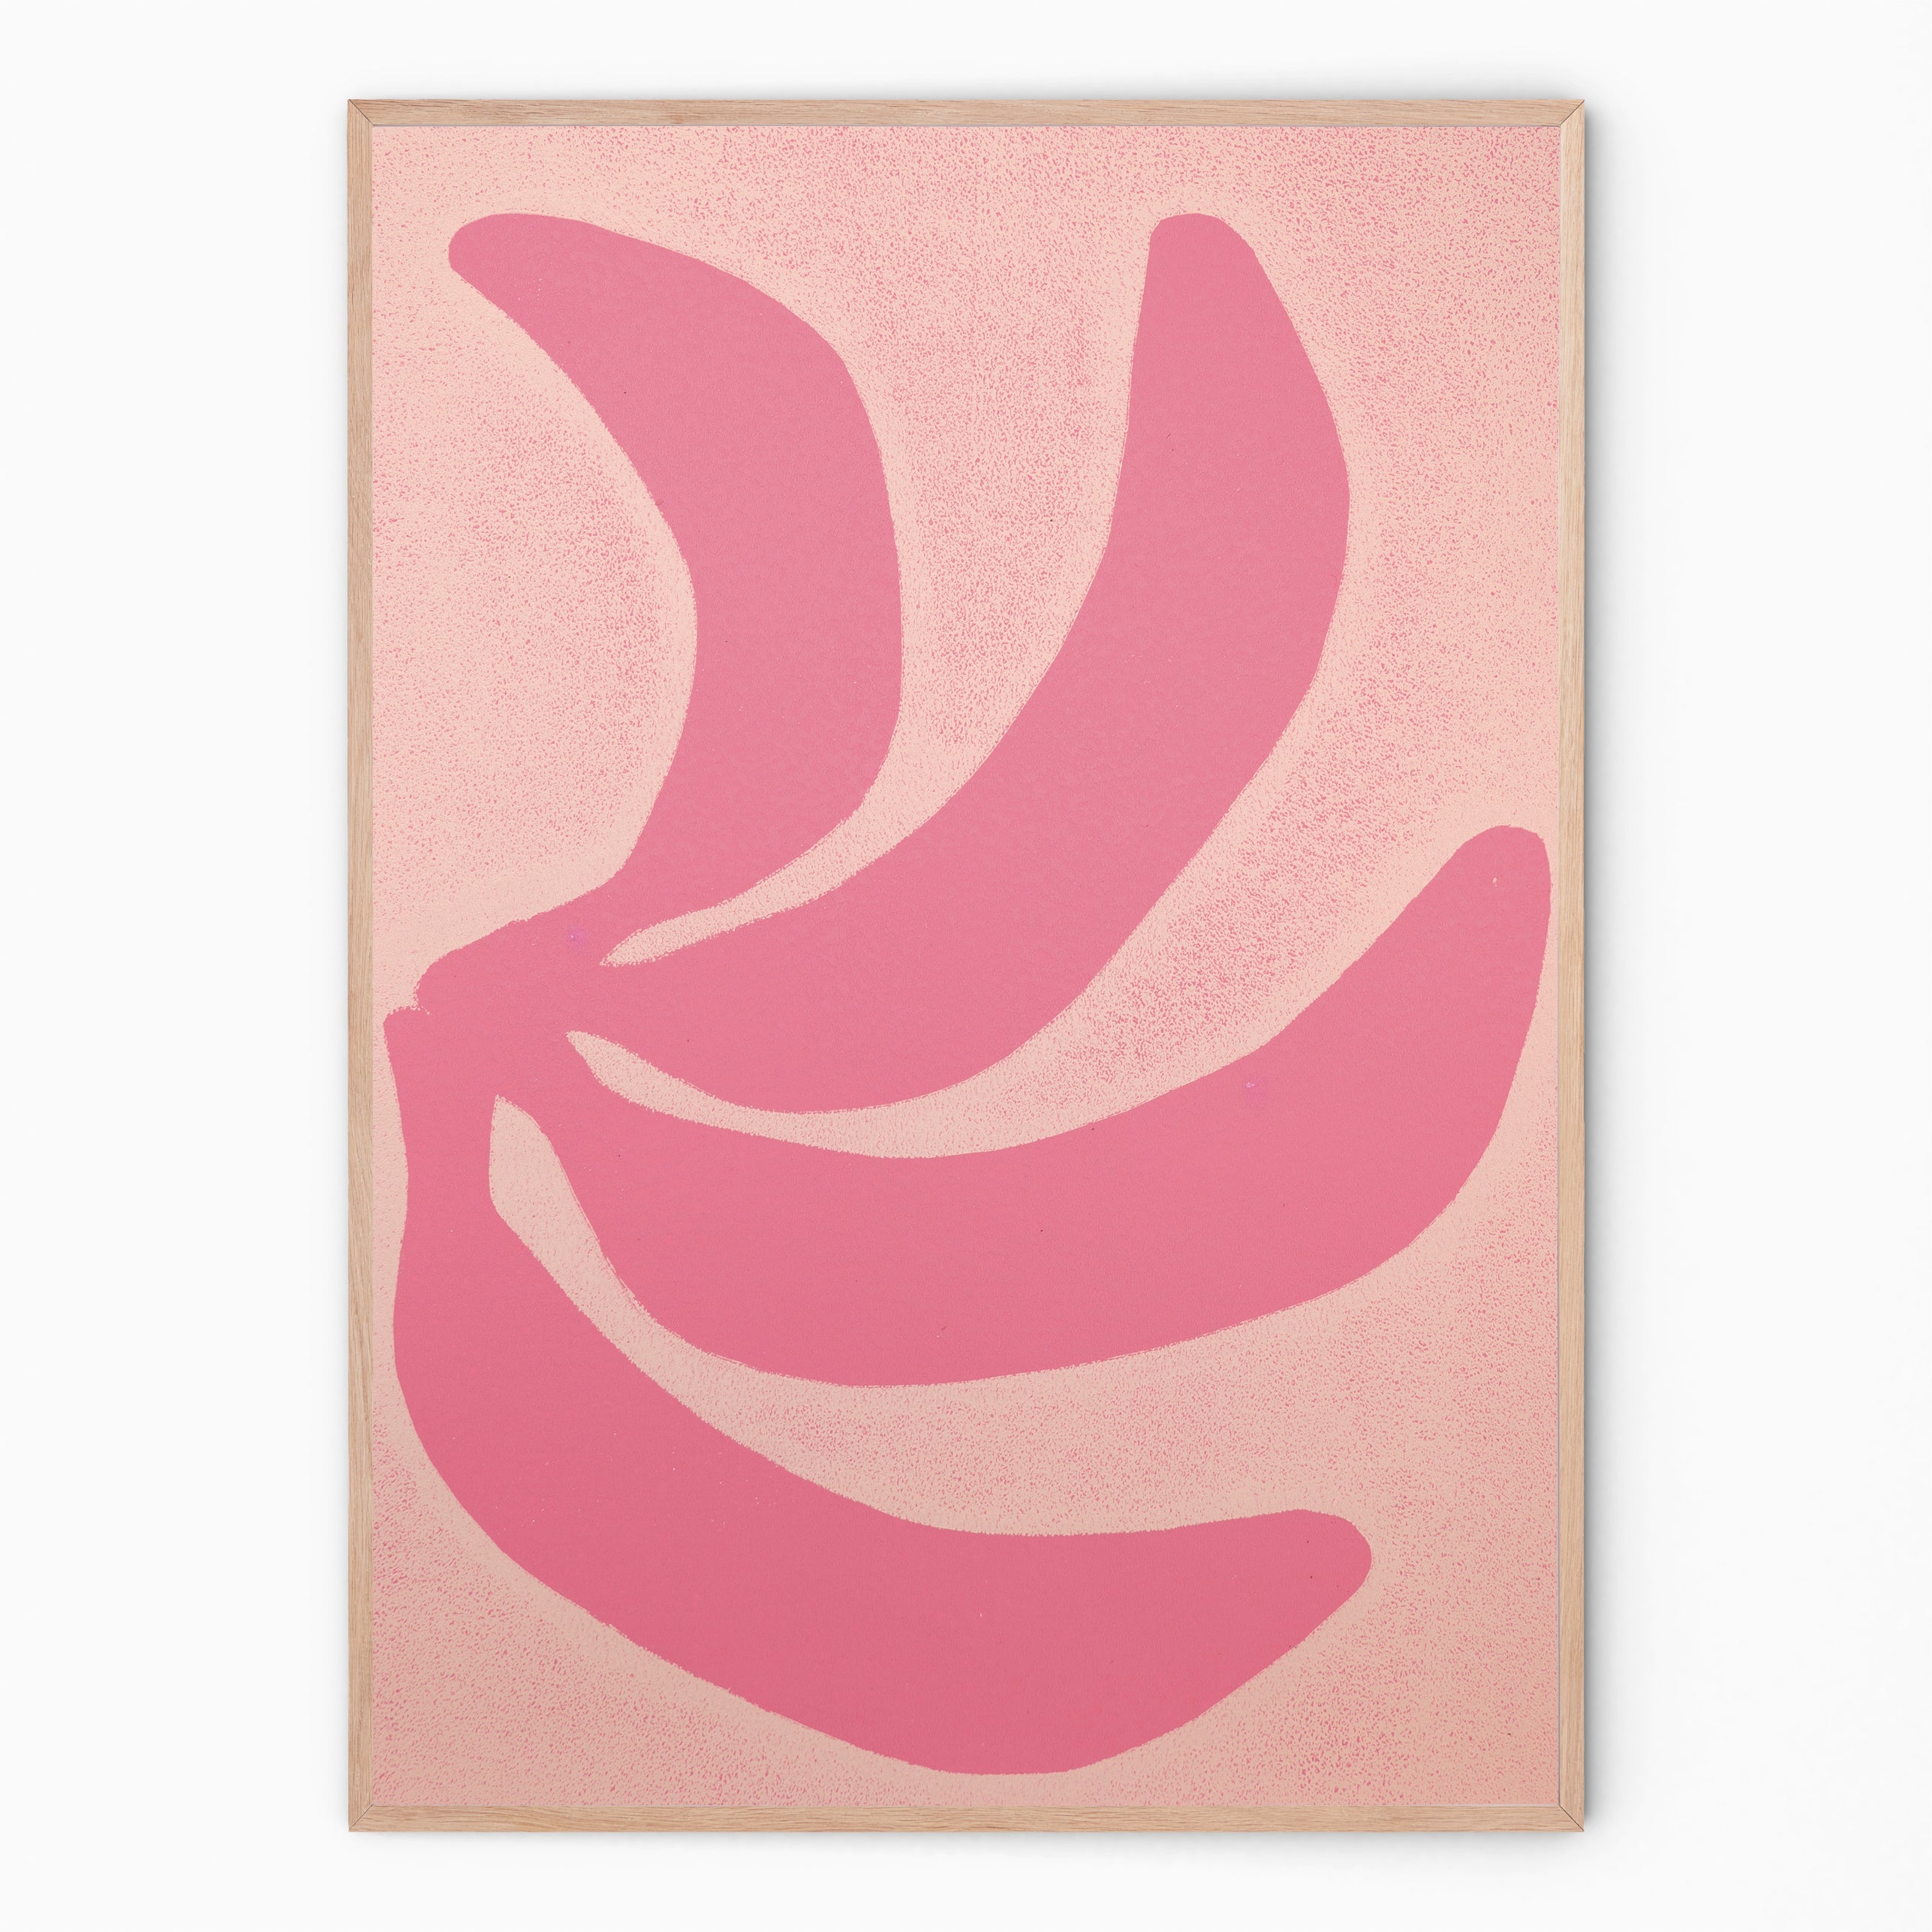 Colorful wall art in mauve pink I Handmade poster Enkel Art Studio